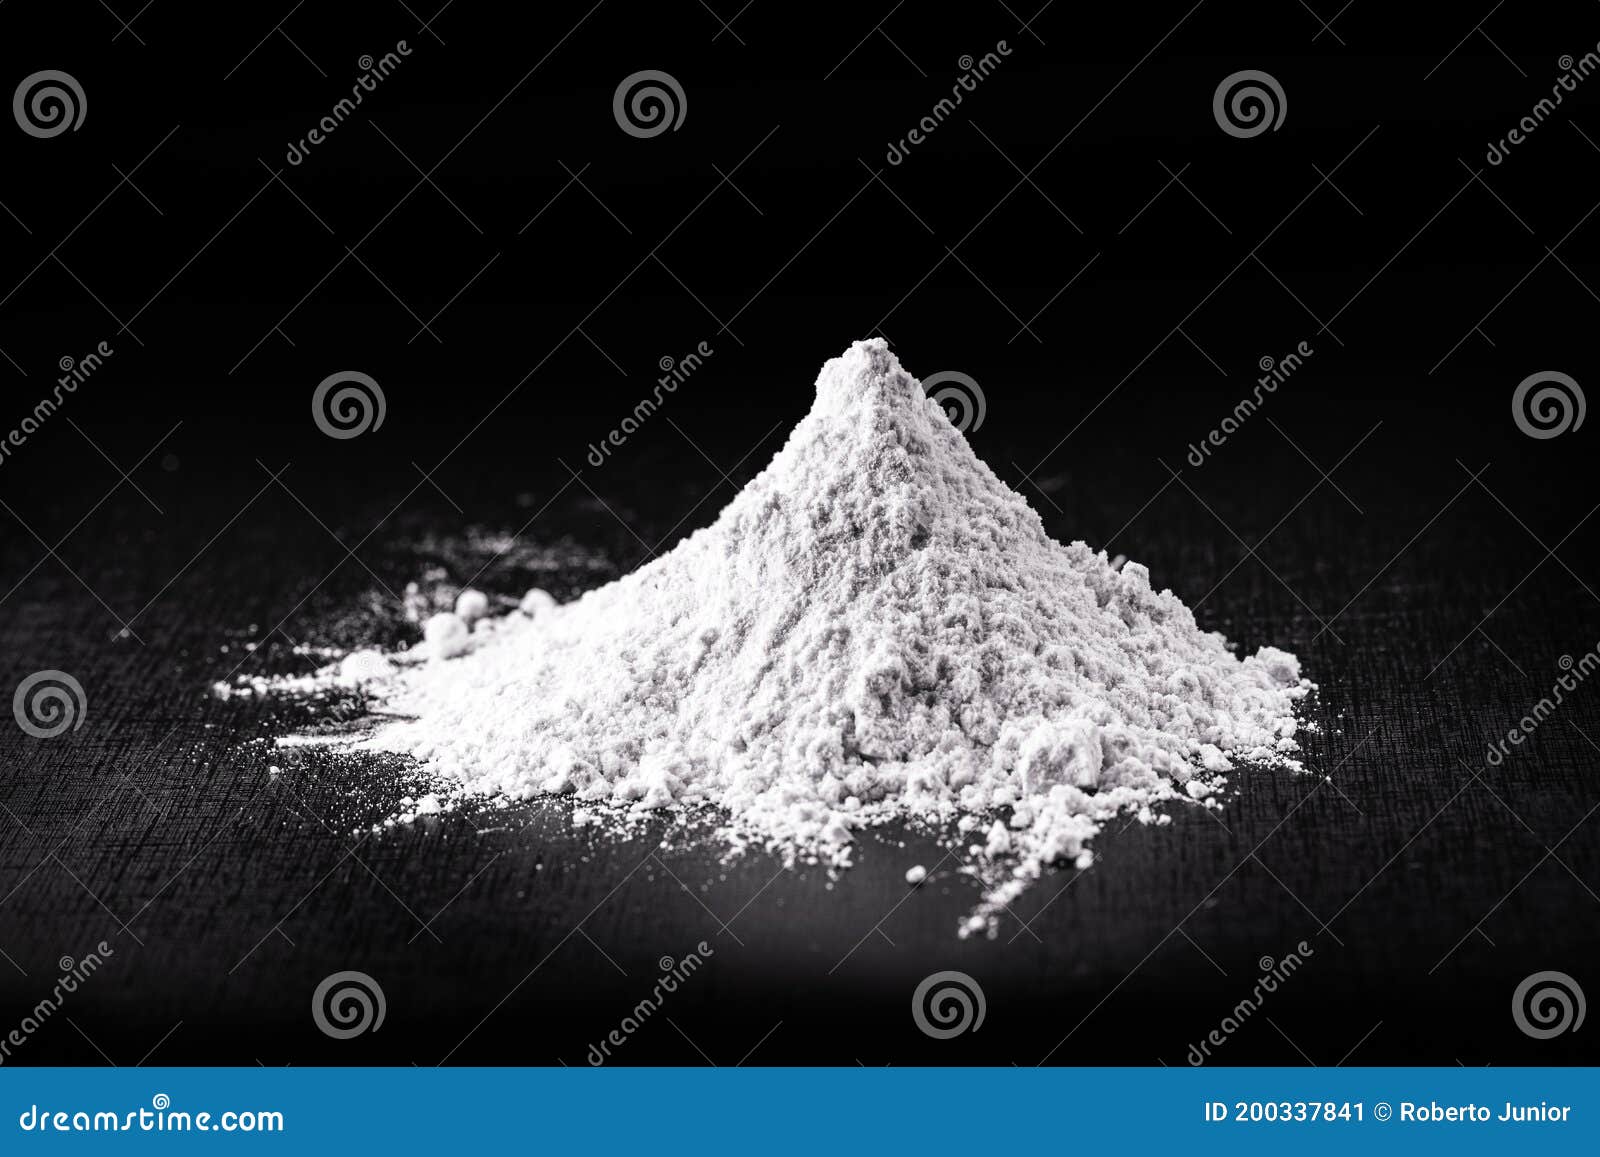 titanium dioxide tio2 powder for cosmetics,  black background